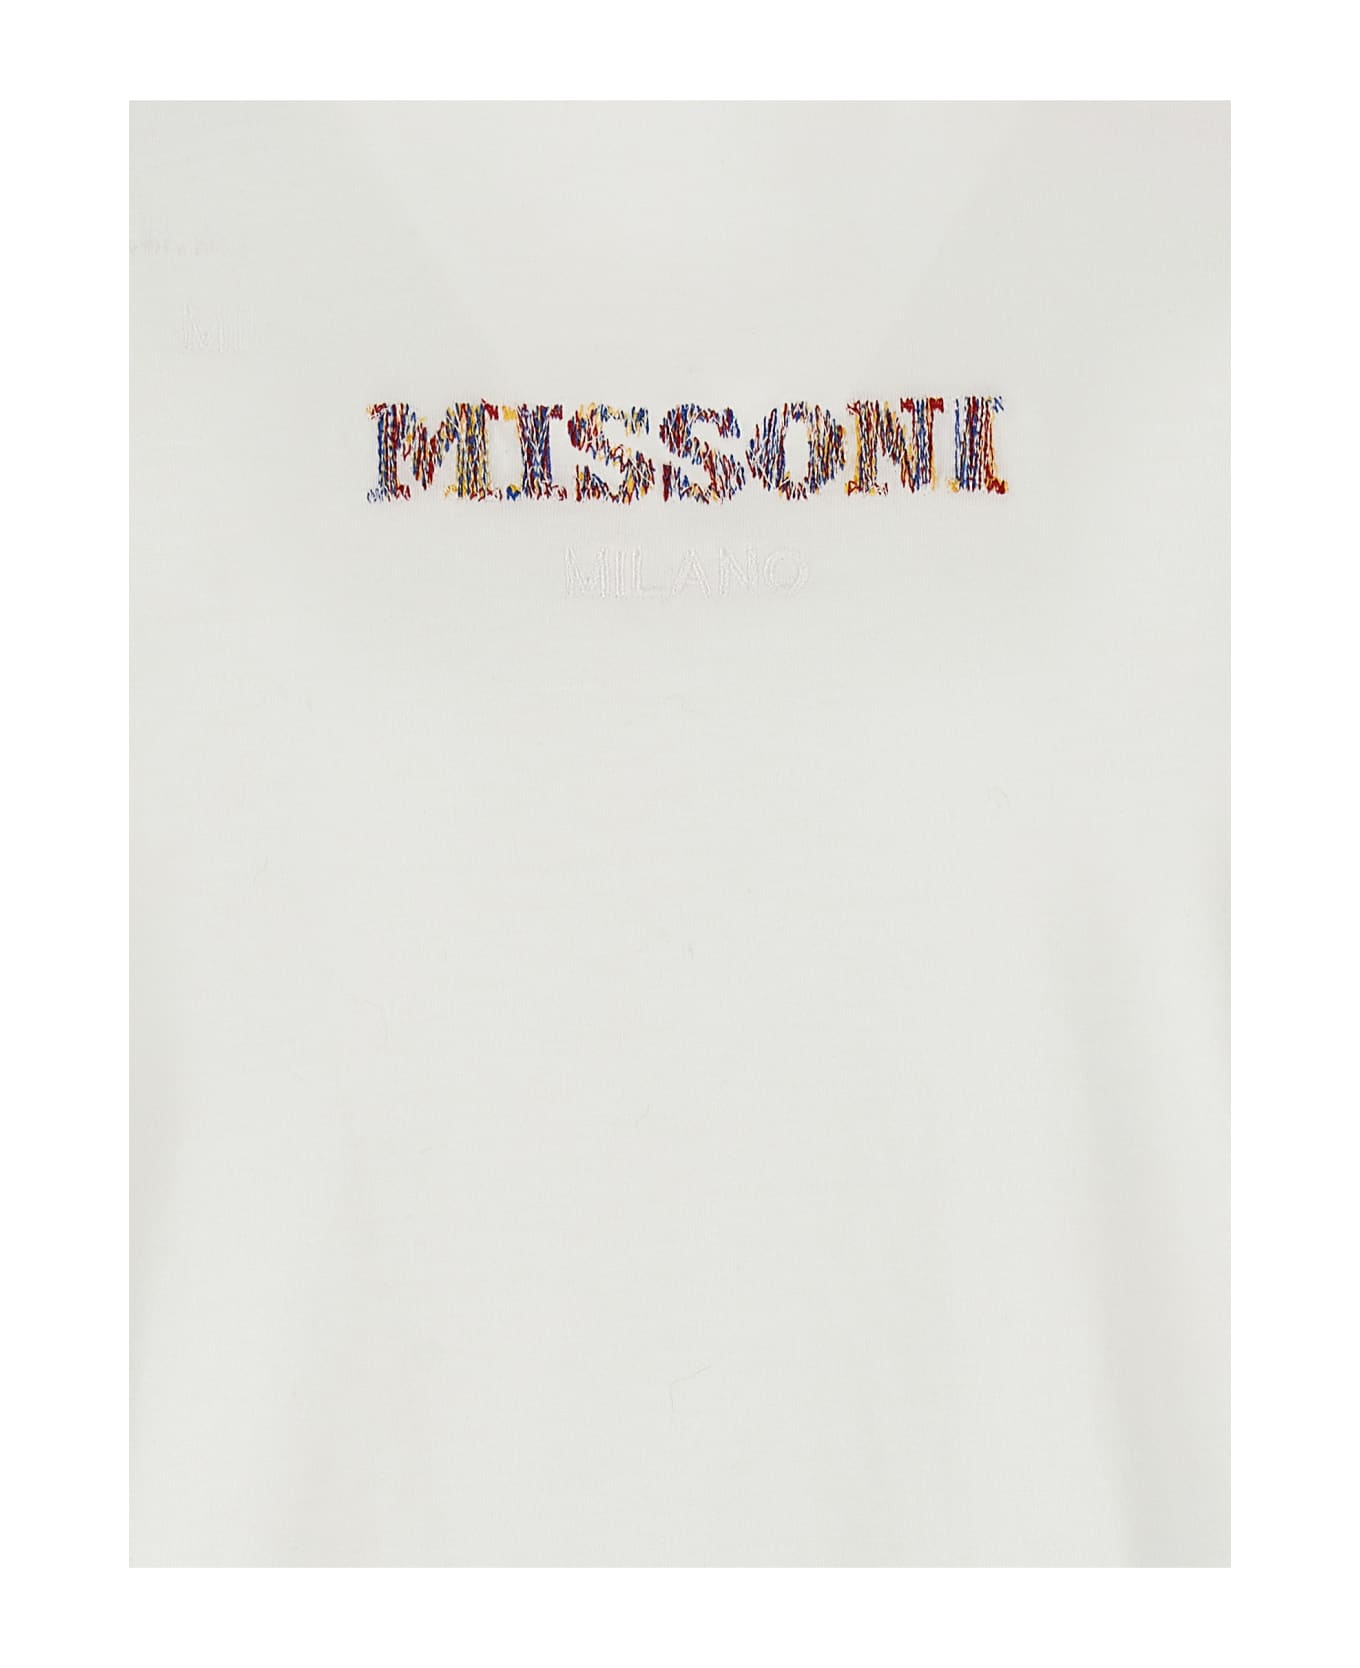 Missoni Logo Embroidery T-shirt - White